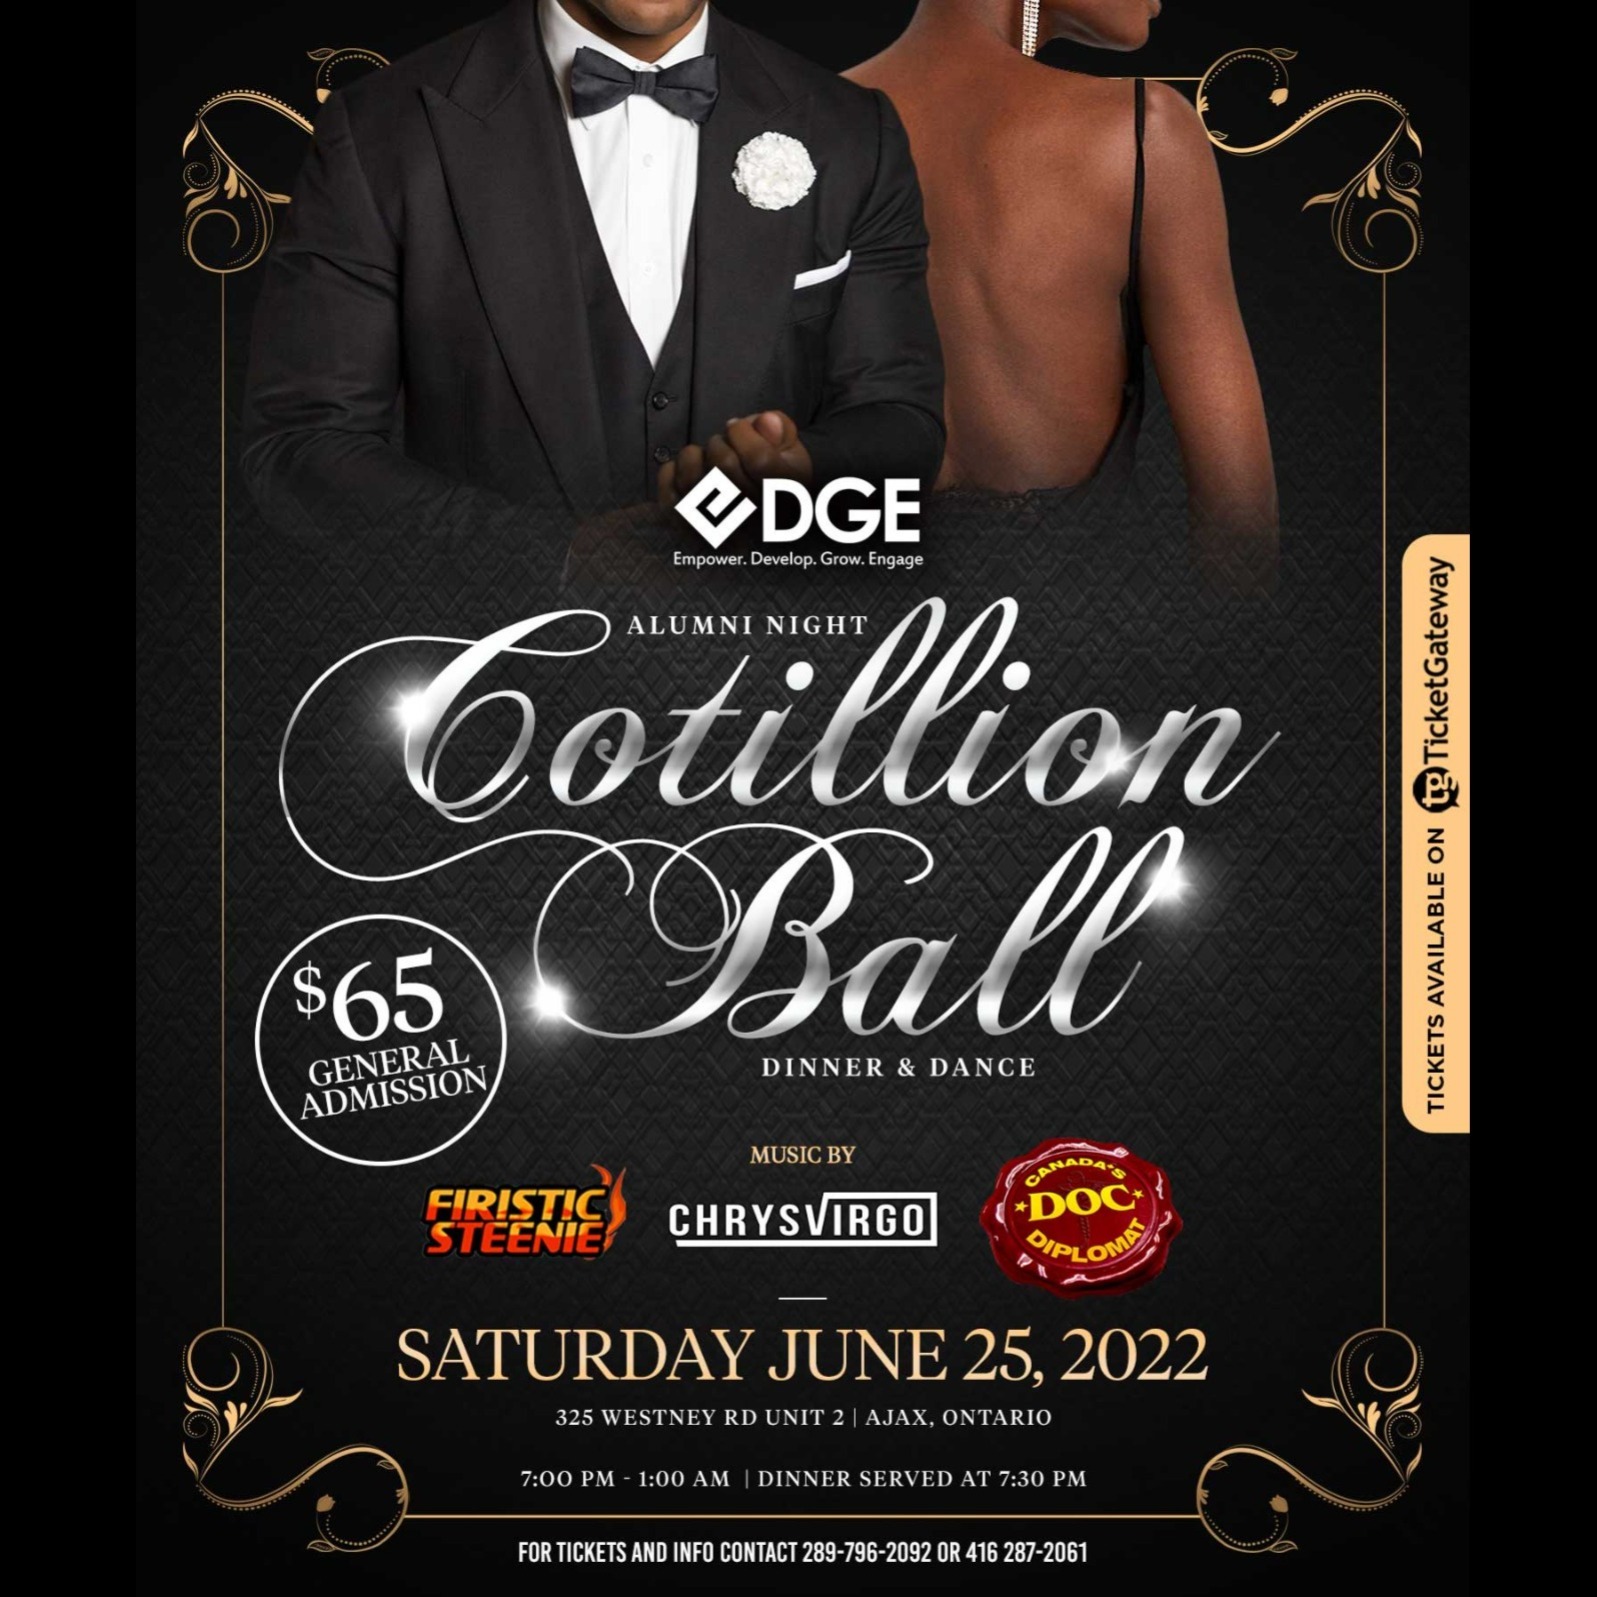 Cotillion Ball Alumni Night